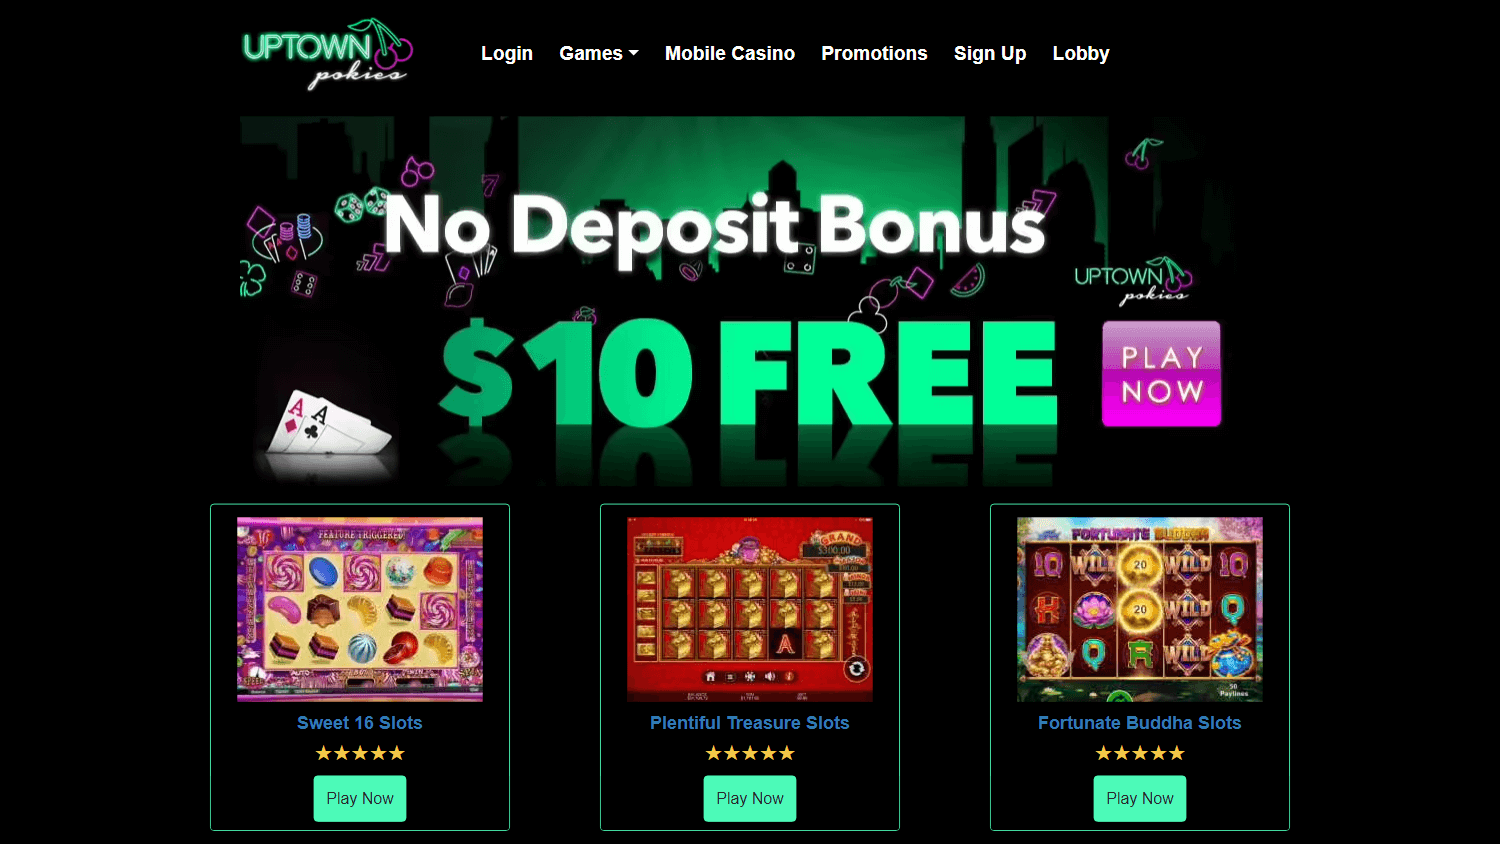 uptown_pokies_casino_homepage_desktop